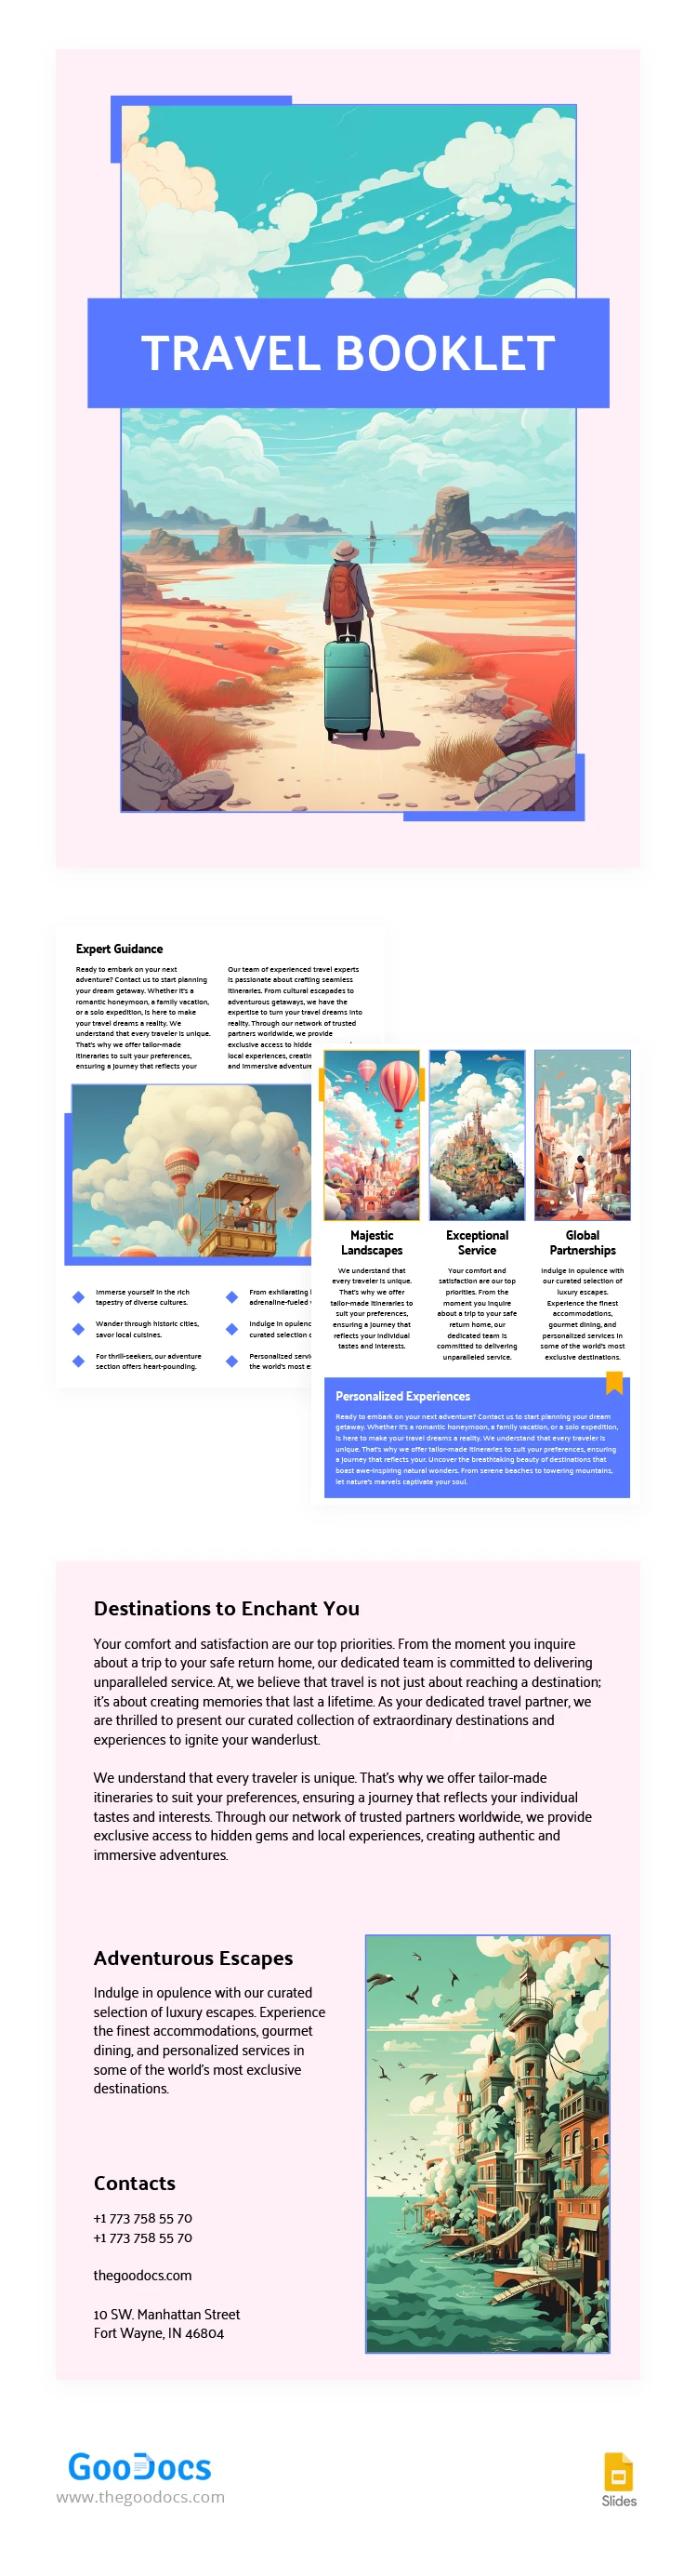 Illustriertes Trendiges Reisebuch - free Google Docs Template - 10067730